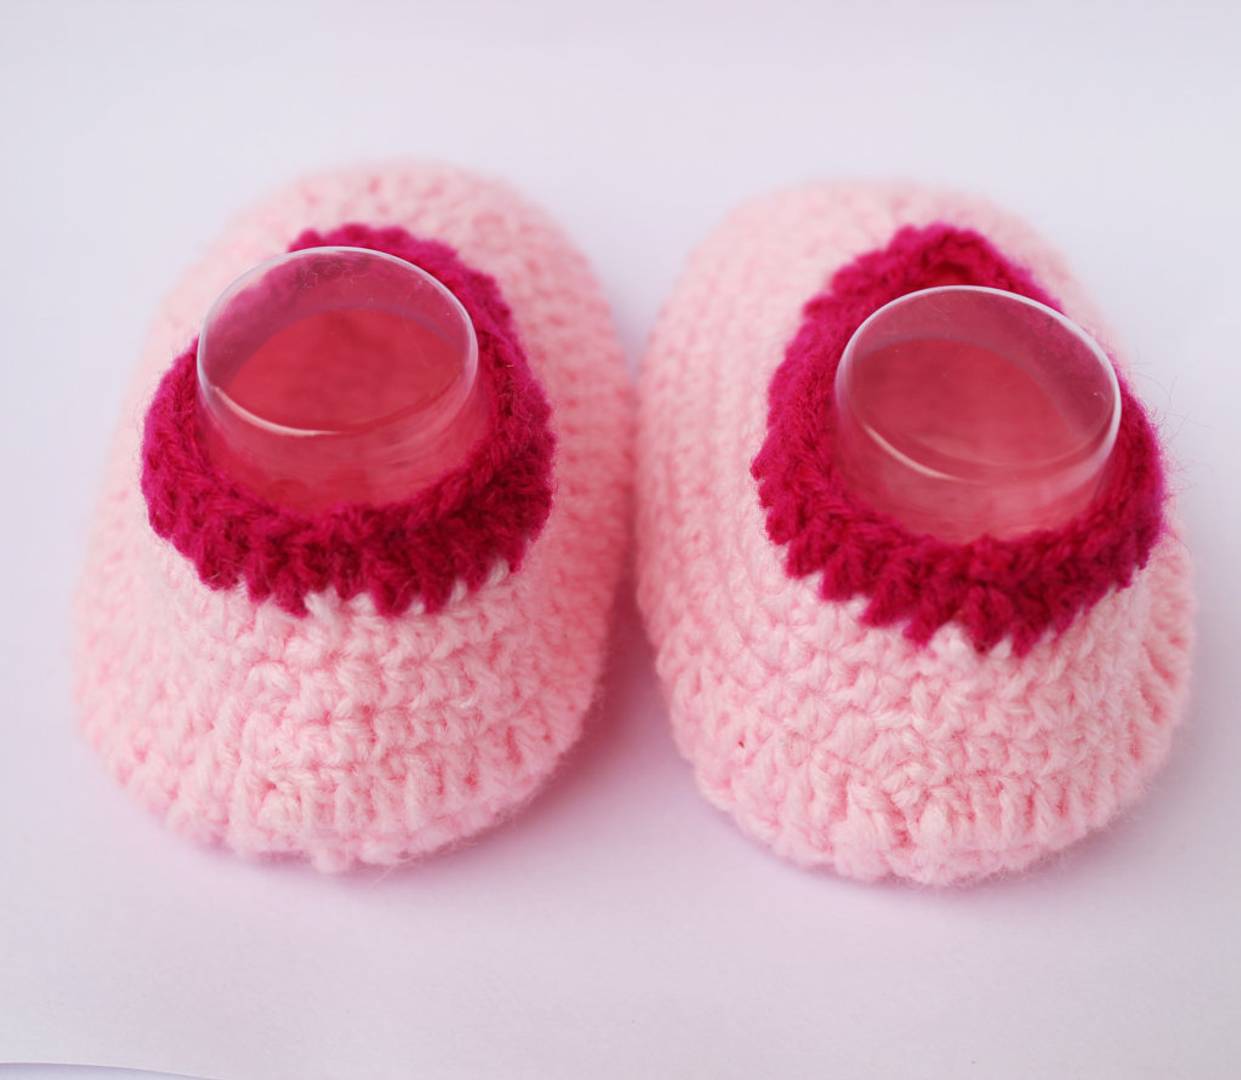 Woolen Soft Sole Pink Booties For Kids